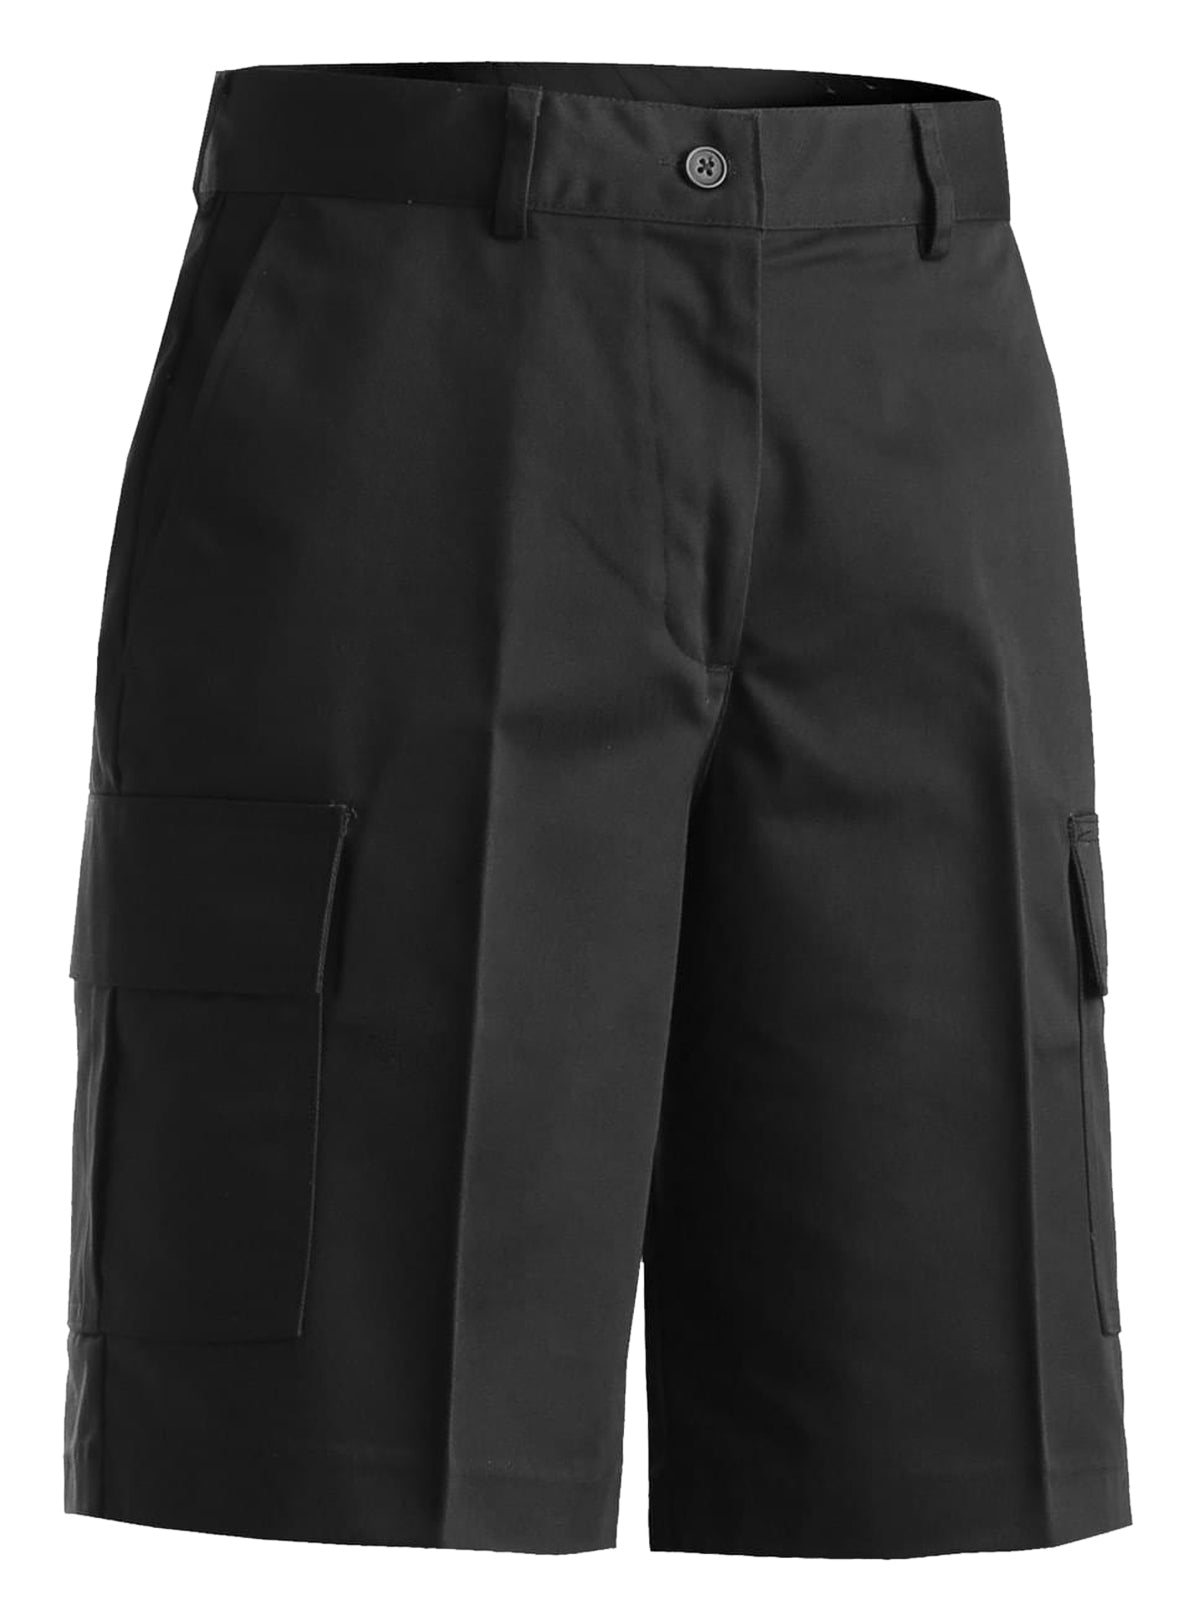 Women's Blended Chino Cargo Shorts - 8473 - Black